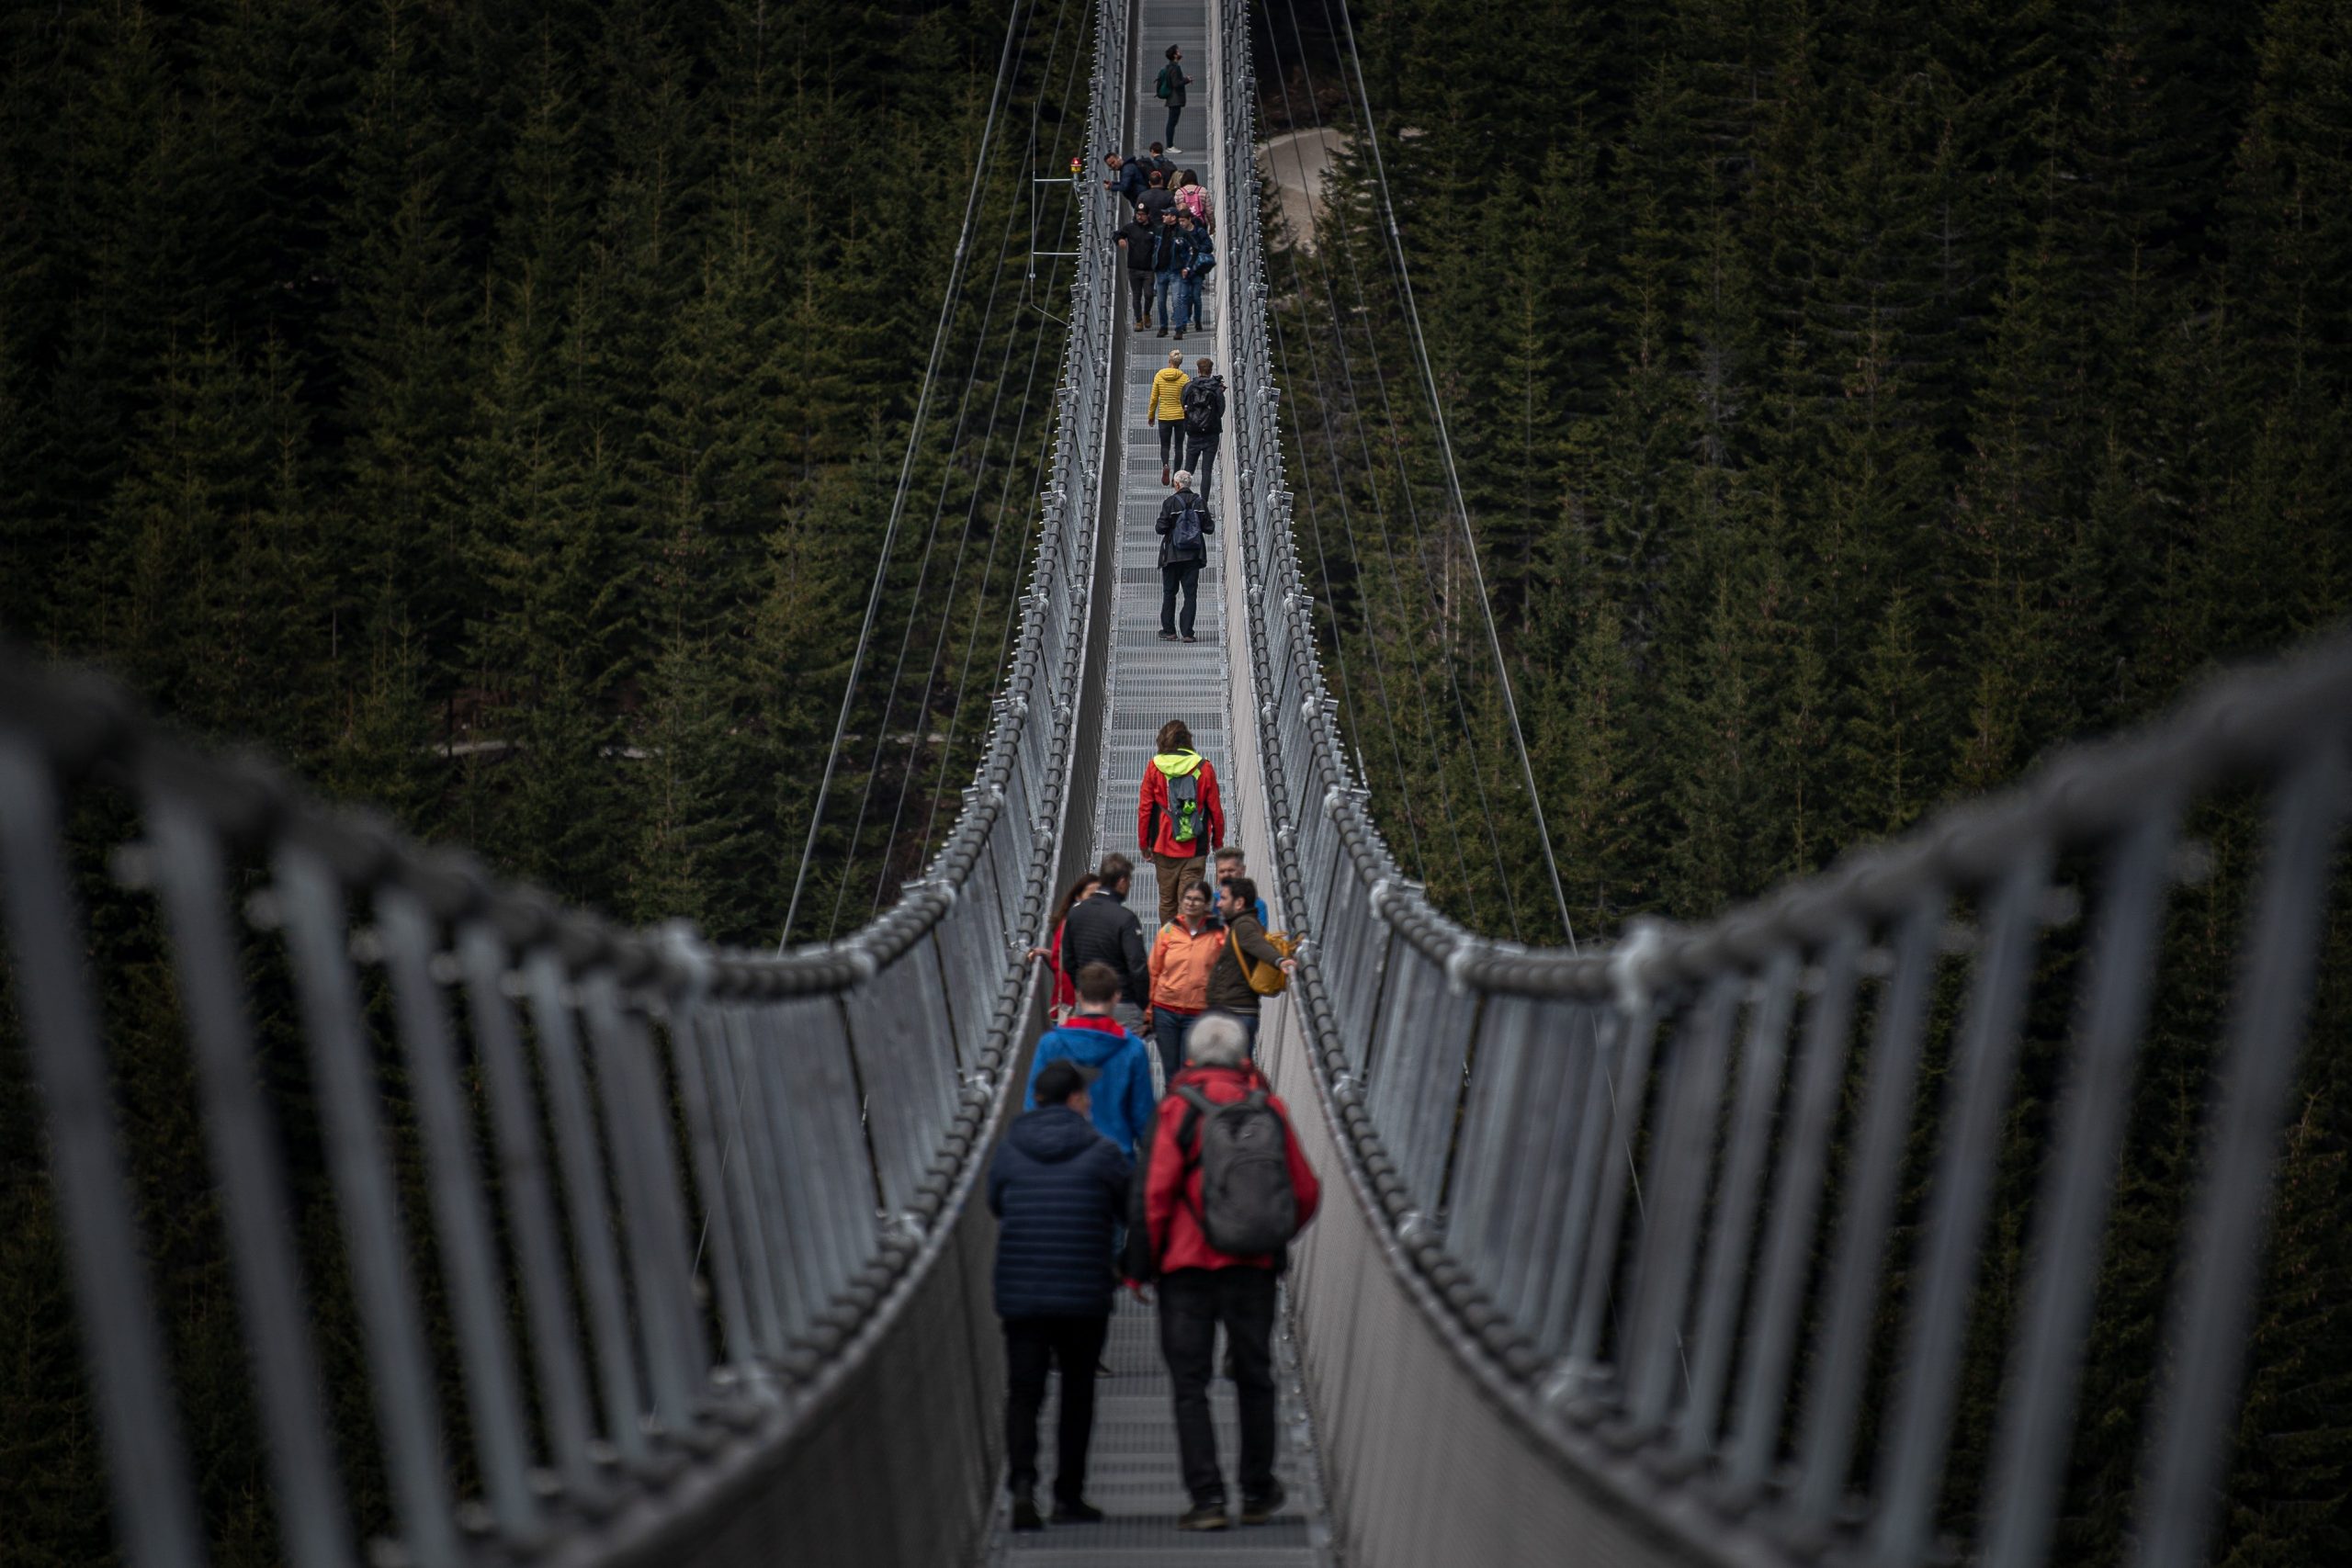 Sky Bridge 721 in the Czech Republic, the world's longest pedestrian suspension bridge